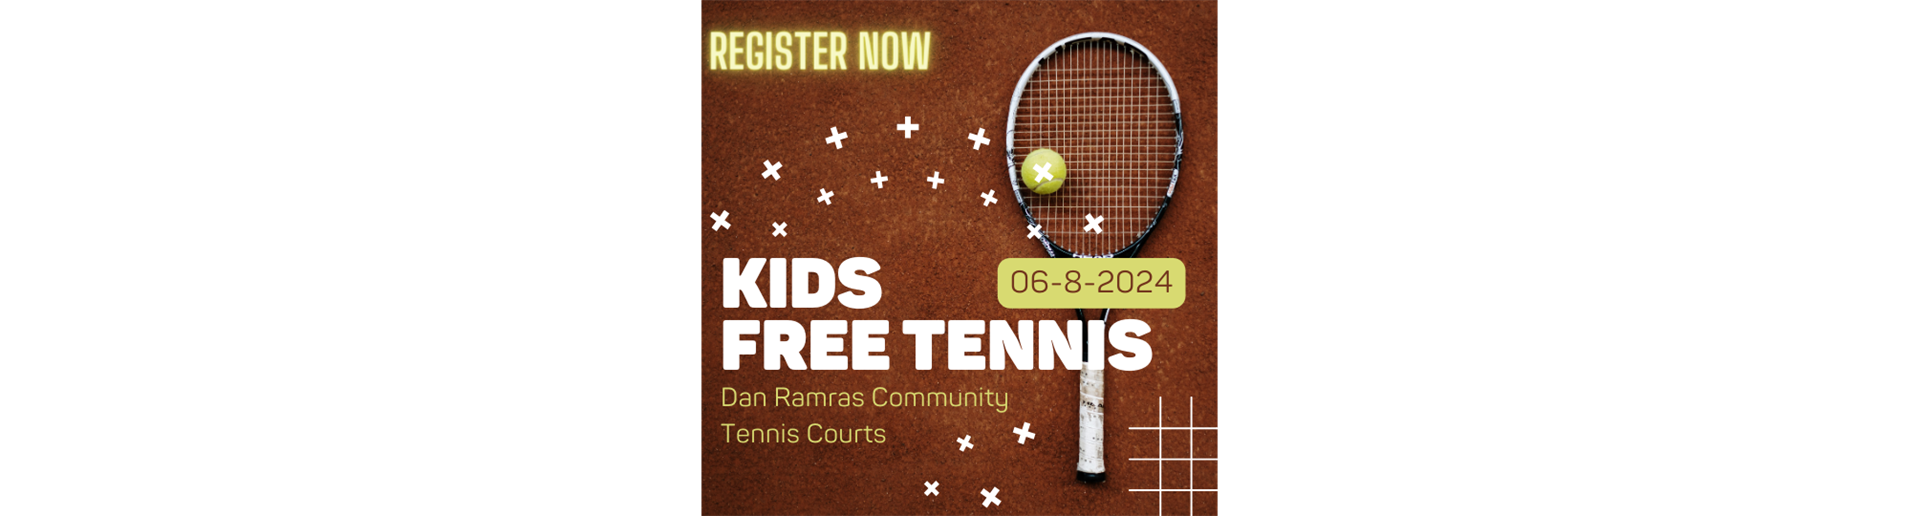 Kids Free Tennis June 8, 2024